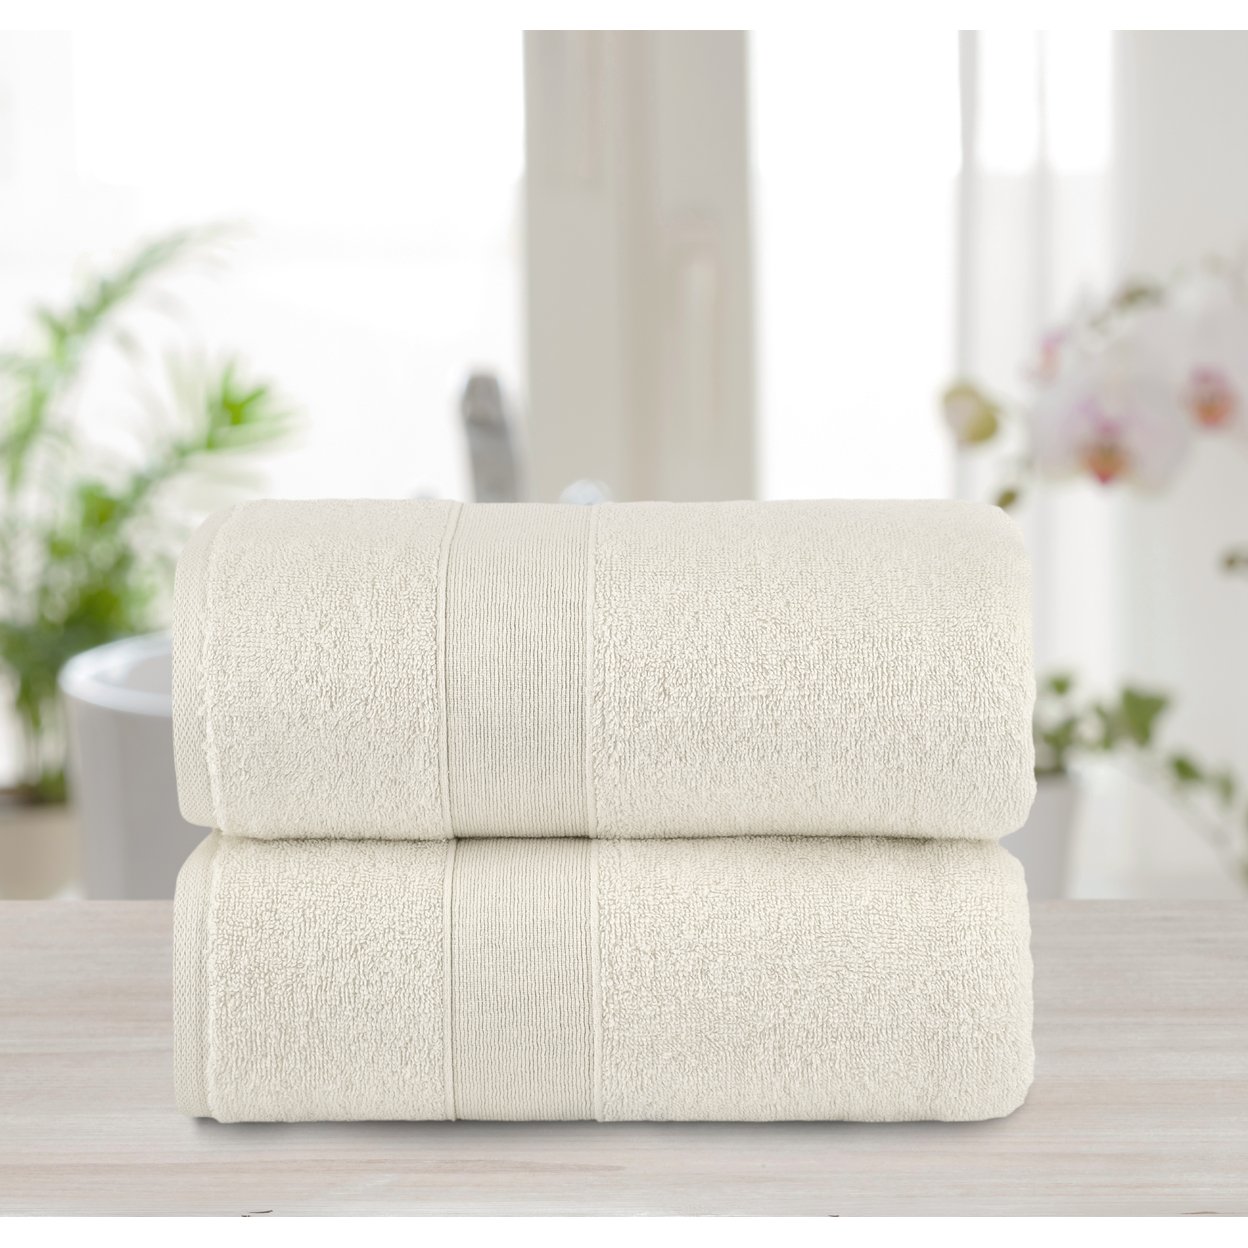 Chic Home Luxurious 2-Piece 100% Pure Turkish Cotton Bath Sheet Towels, 30x68, Woven Dobby Border Design, OEKO-TEX Certified Set - Beige